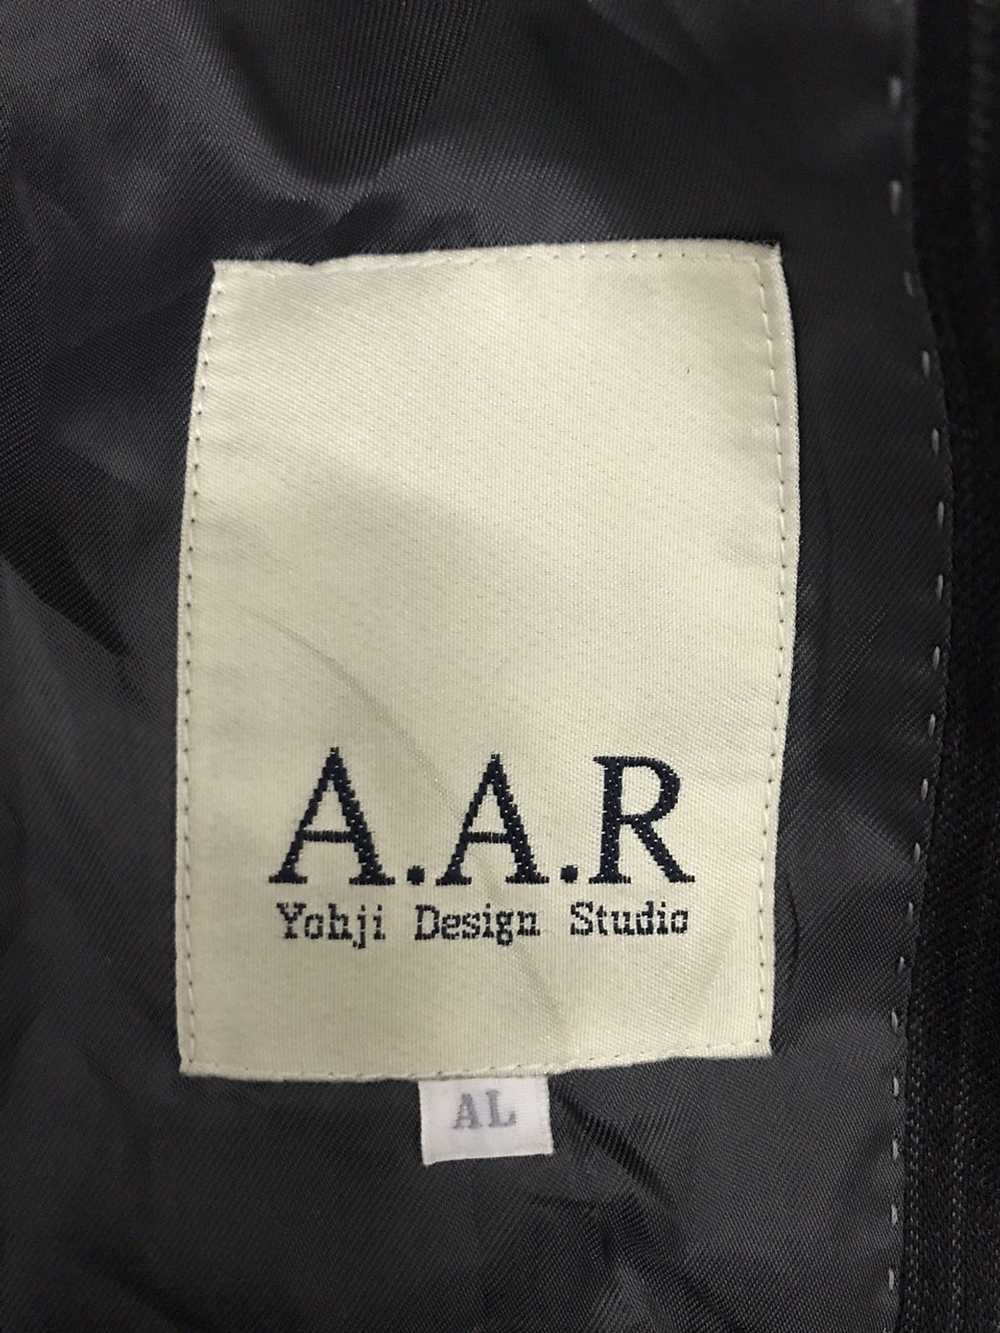 Yohji Yamamoto A.A.R by Yohji Design Studio Blazer - image 10